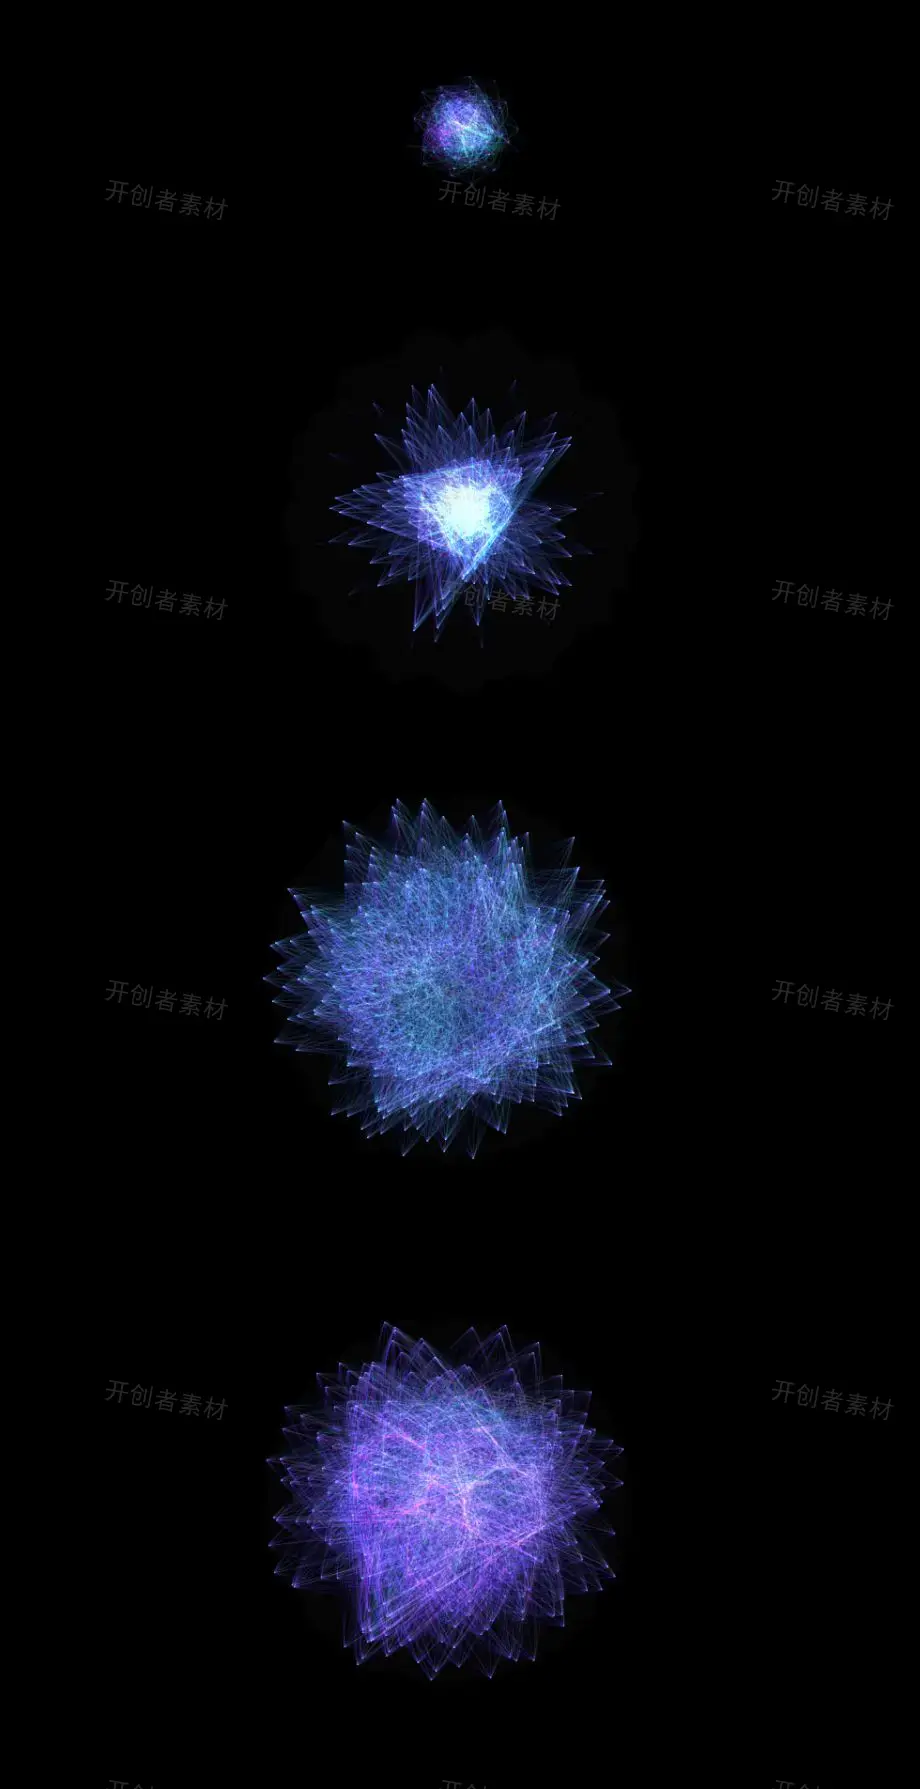 html5/canvas抽象的花纹动画炫酷粒子夜空特效